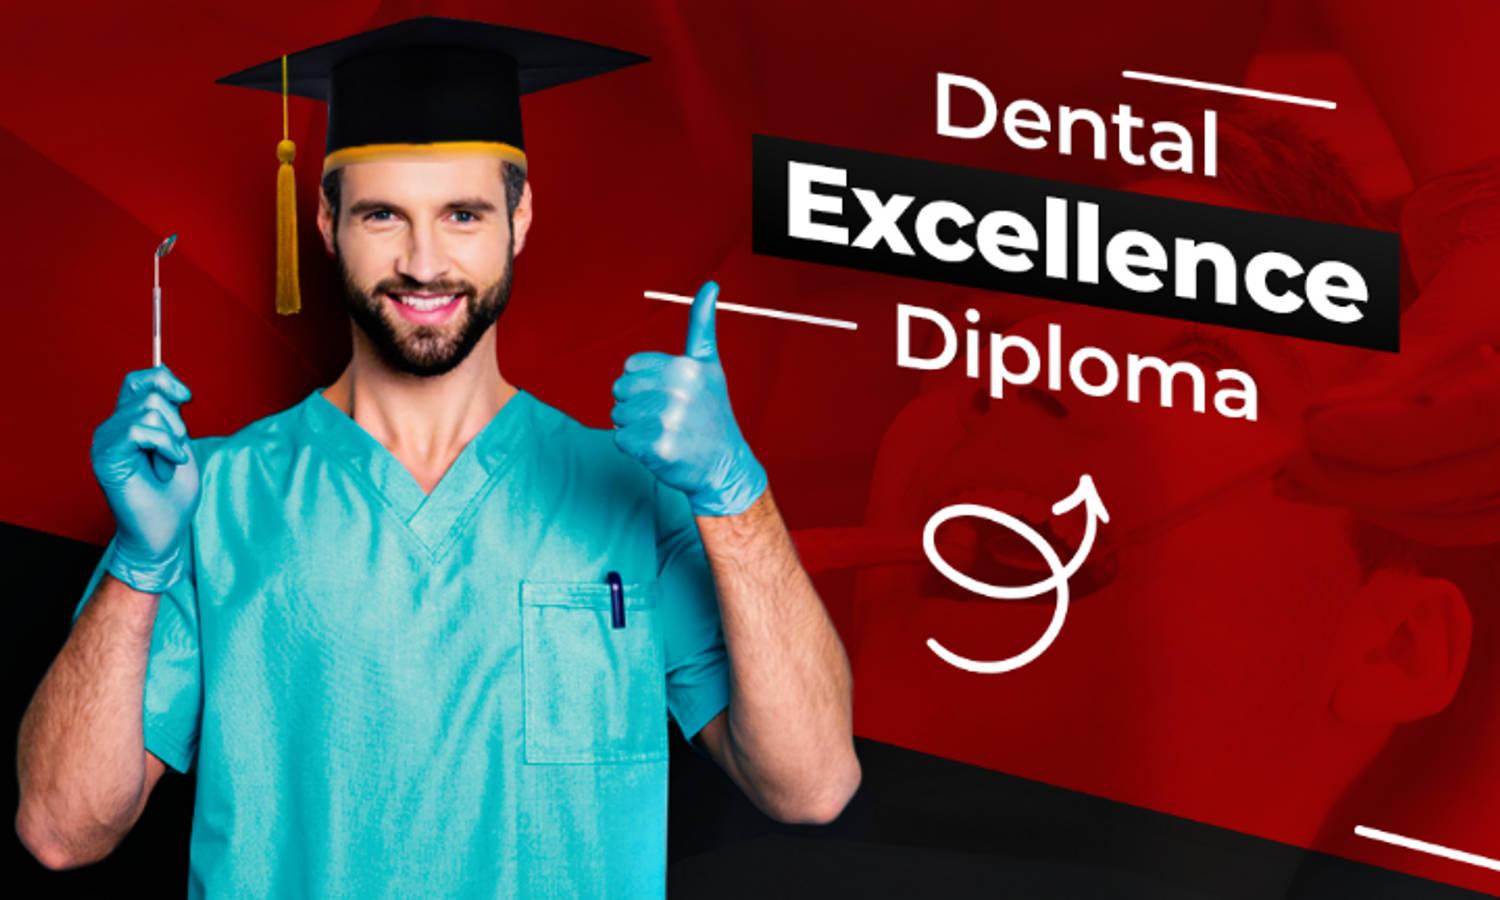 Dental Excellence Diploma